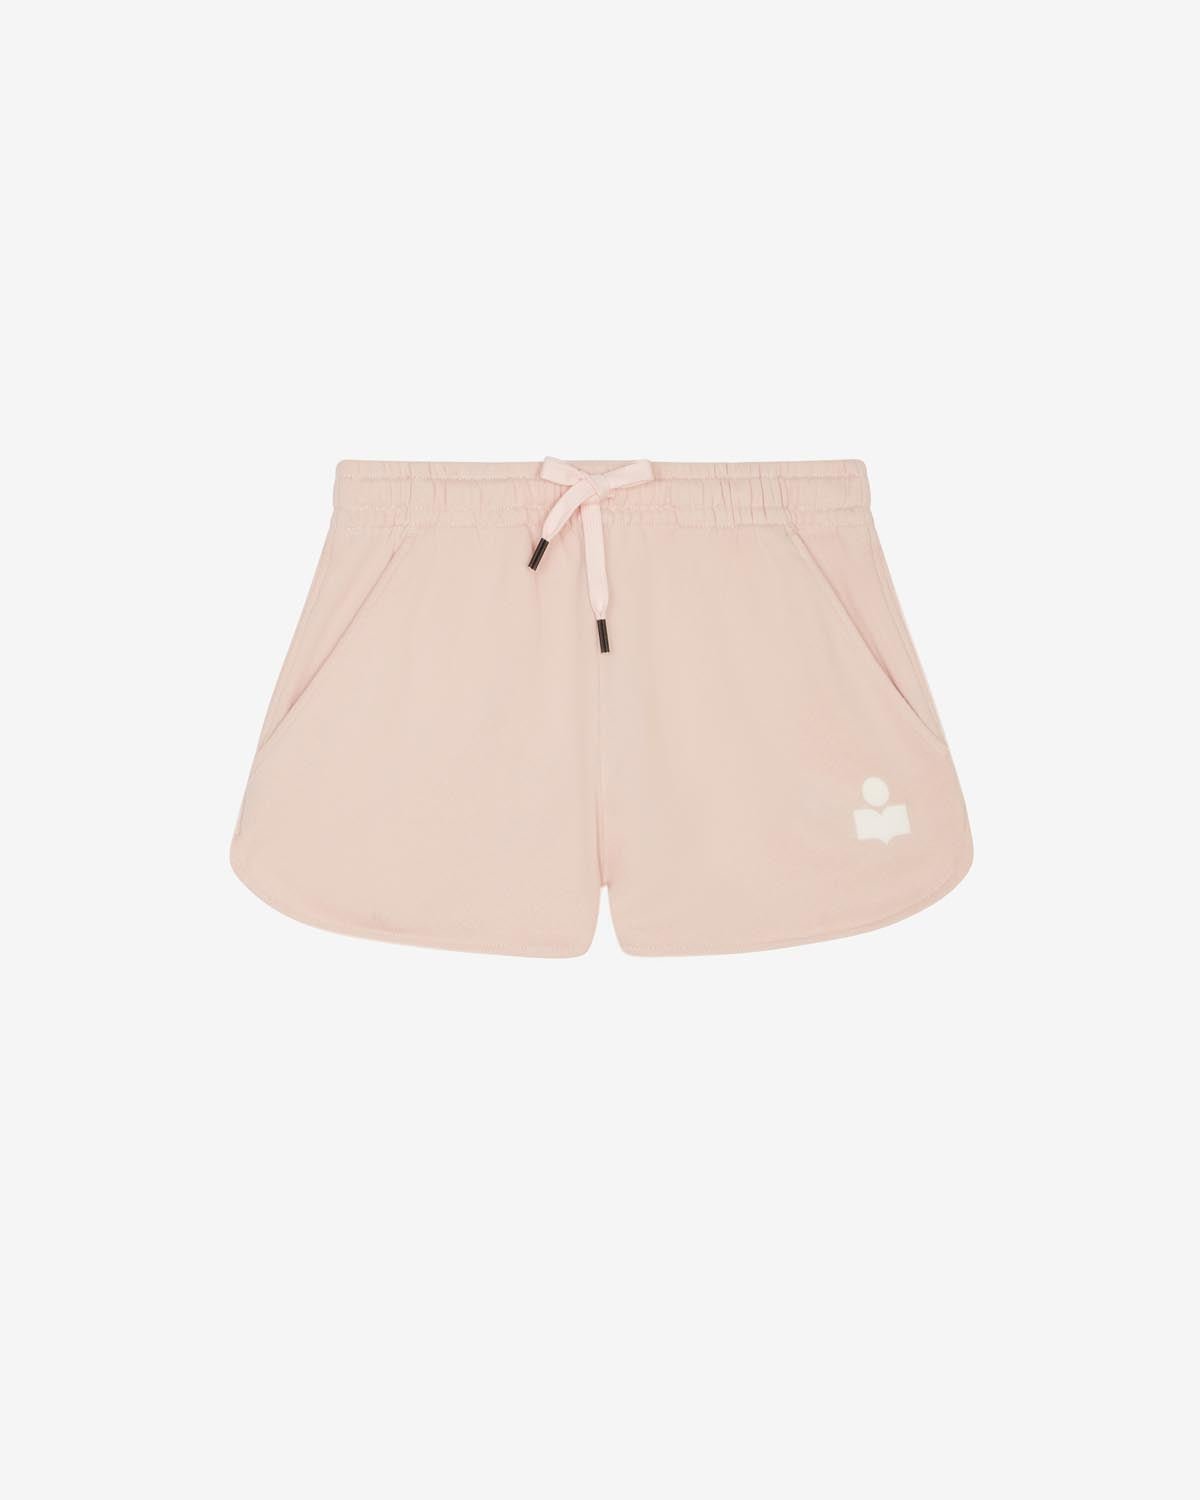 Mifa shorts Woman Pearl rose-ecru 1